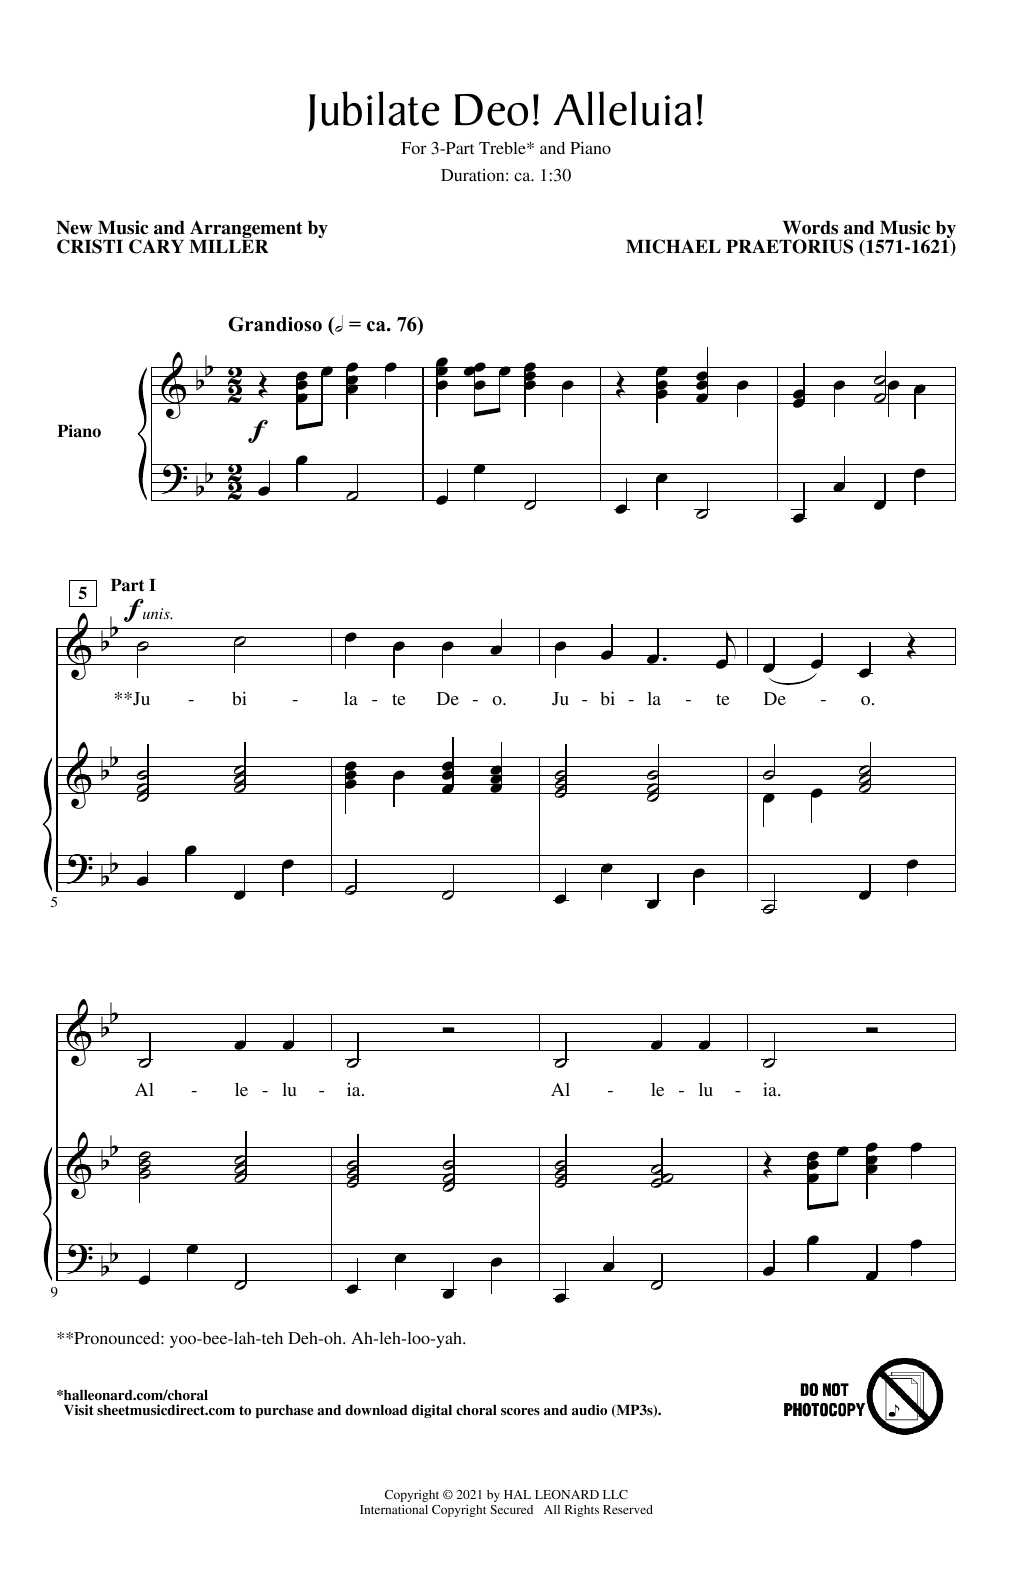 Michael Praetorious Jubilate Deo! Alleluia! (arr. Cristi Cary Miller) sheet music notes and chords arranged for 3-Part Treble Choir